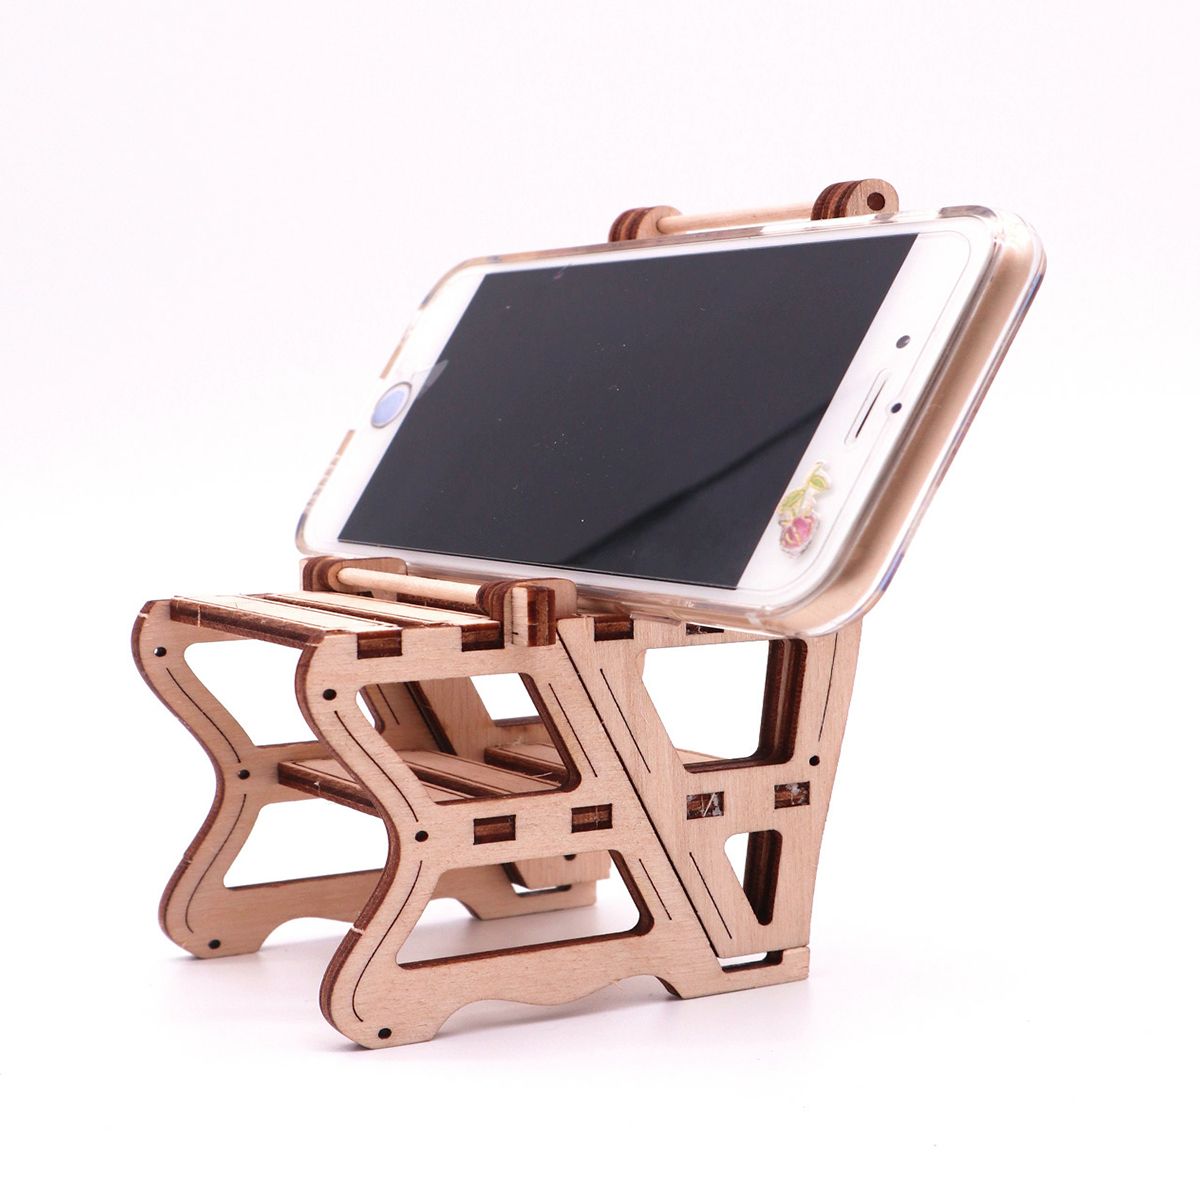 Self-Assembly-Wooden-Chair-Birch-Phone-Shelf-Holder-Model-Gift-Children-Science-Model-Building-Kits-1456822